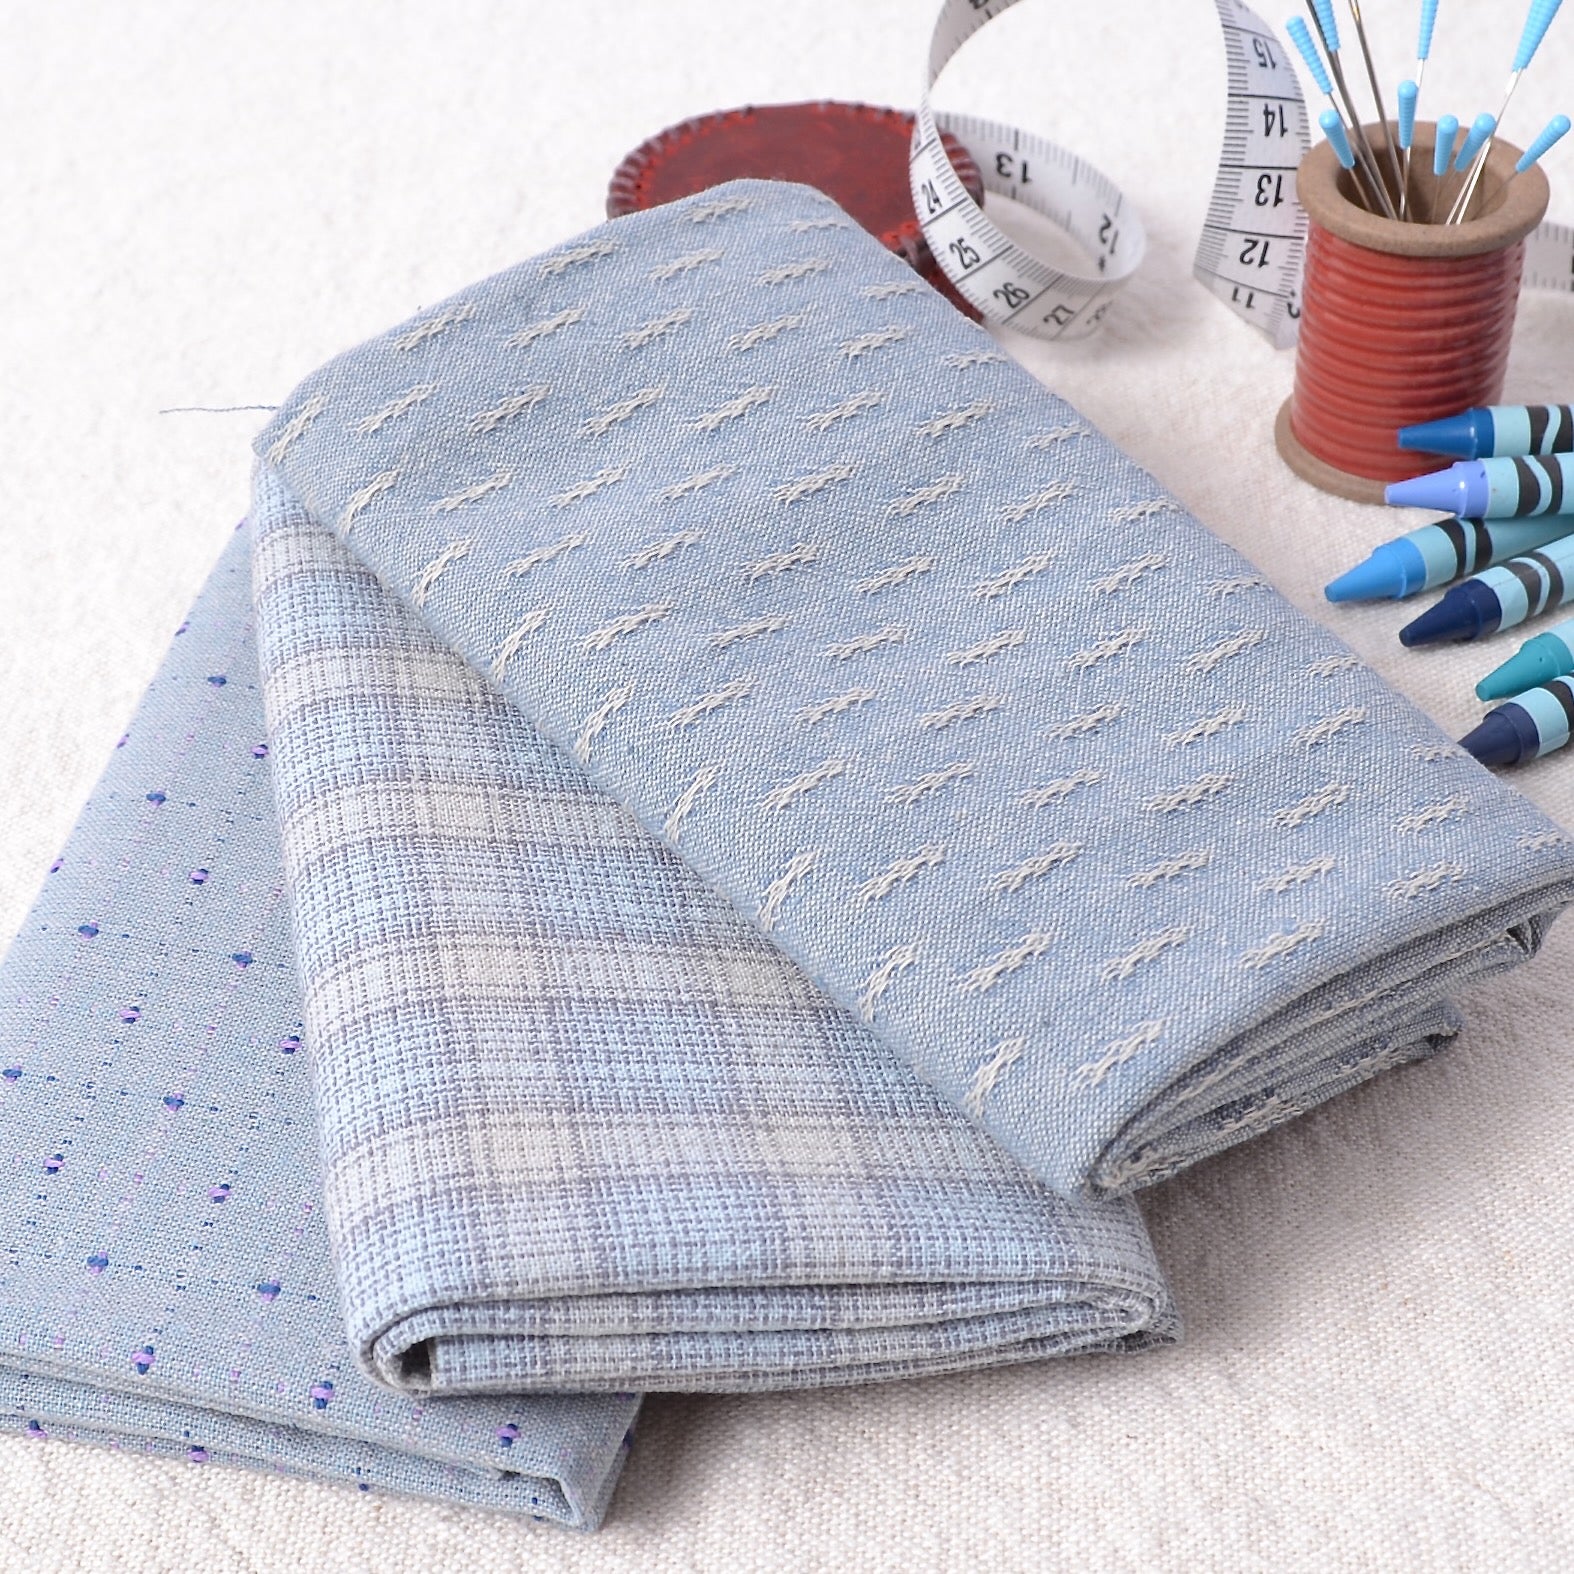 Dyed Yarn Cotton Fabric Bundle of 3, Periwinkle Blues